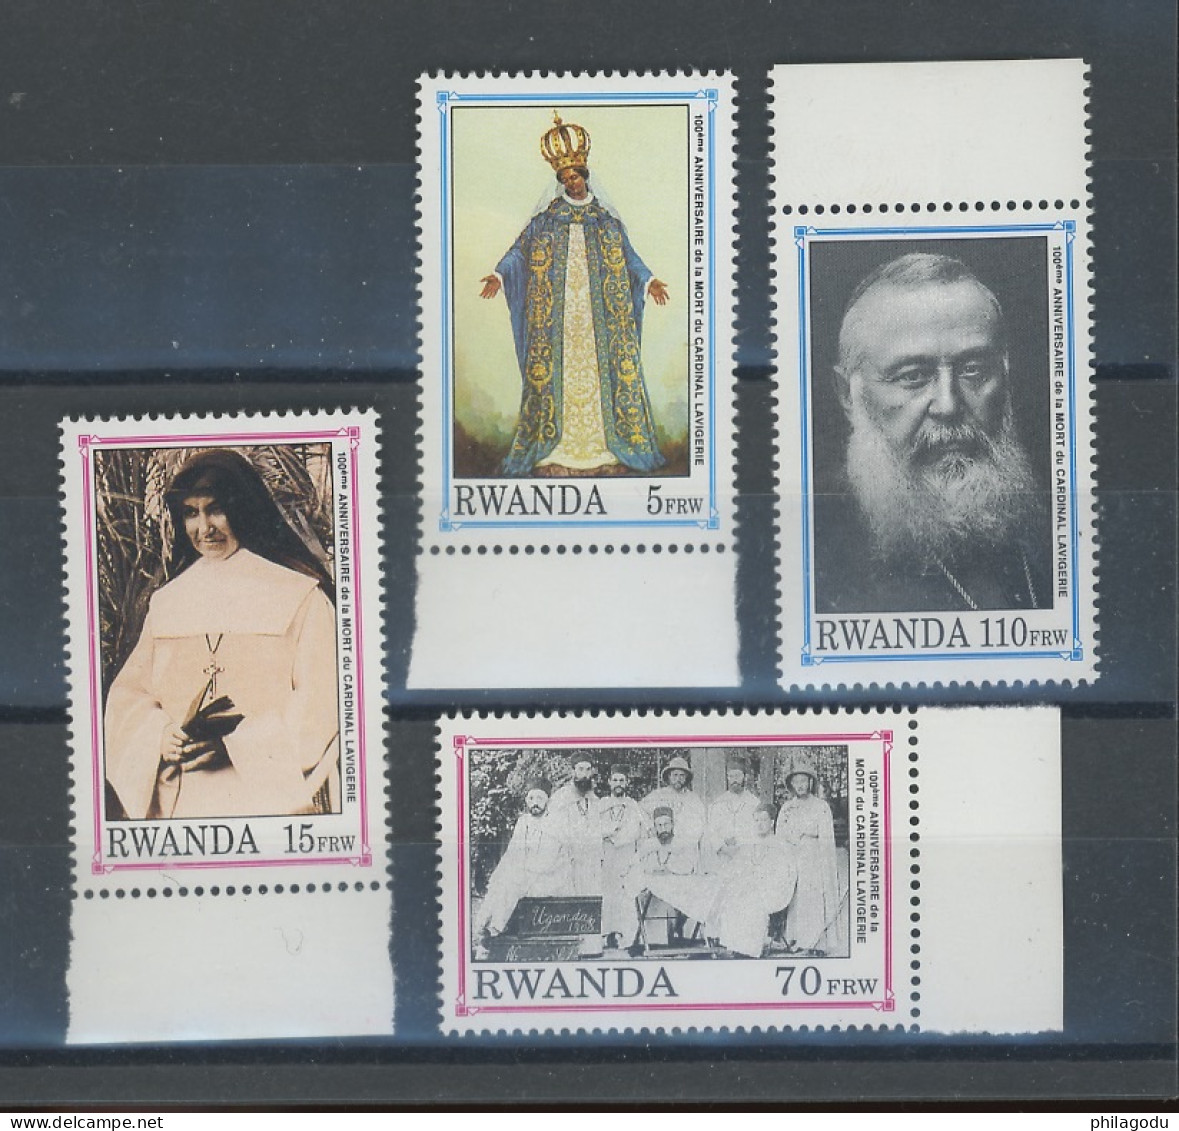 1992  Cardinal Lavigerie  Cob 1388/1391 **   Cote 68,--euros - Unused Stamps